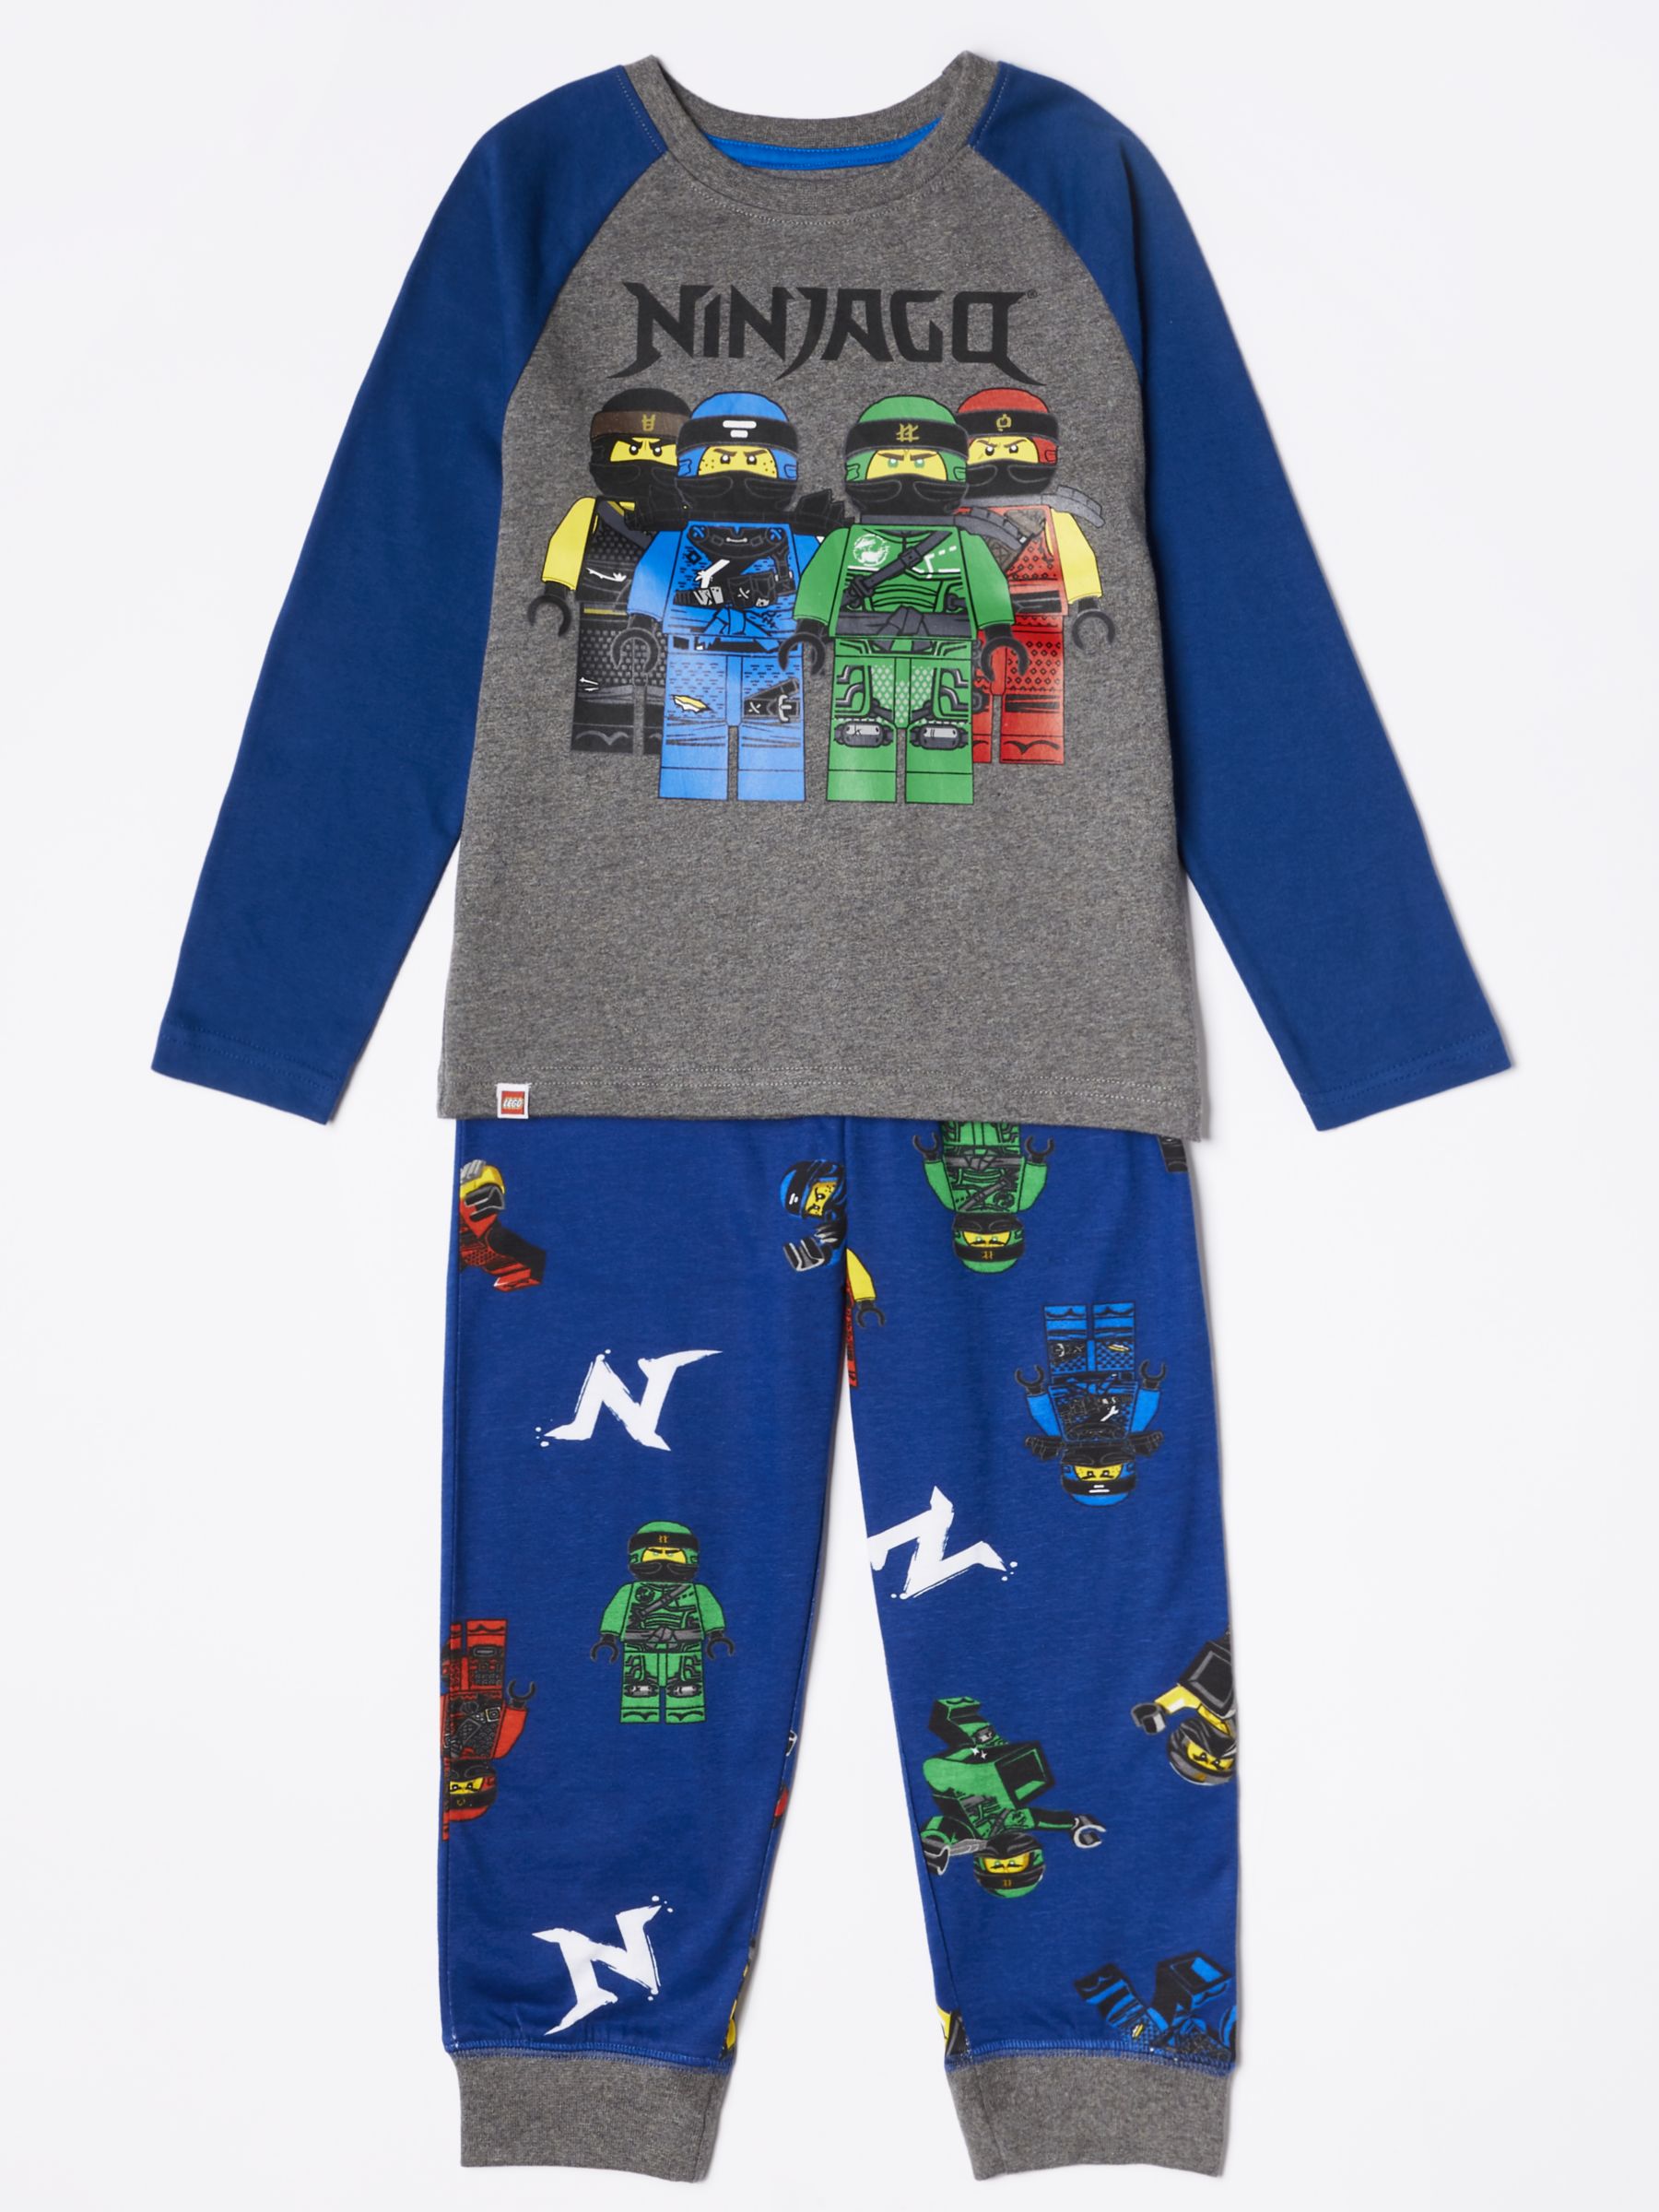 LEGO Ninjago Boys' Pyjamas, Blue/Grey